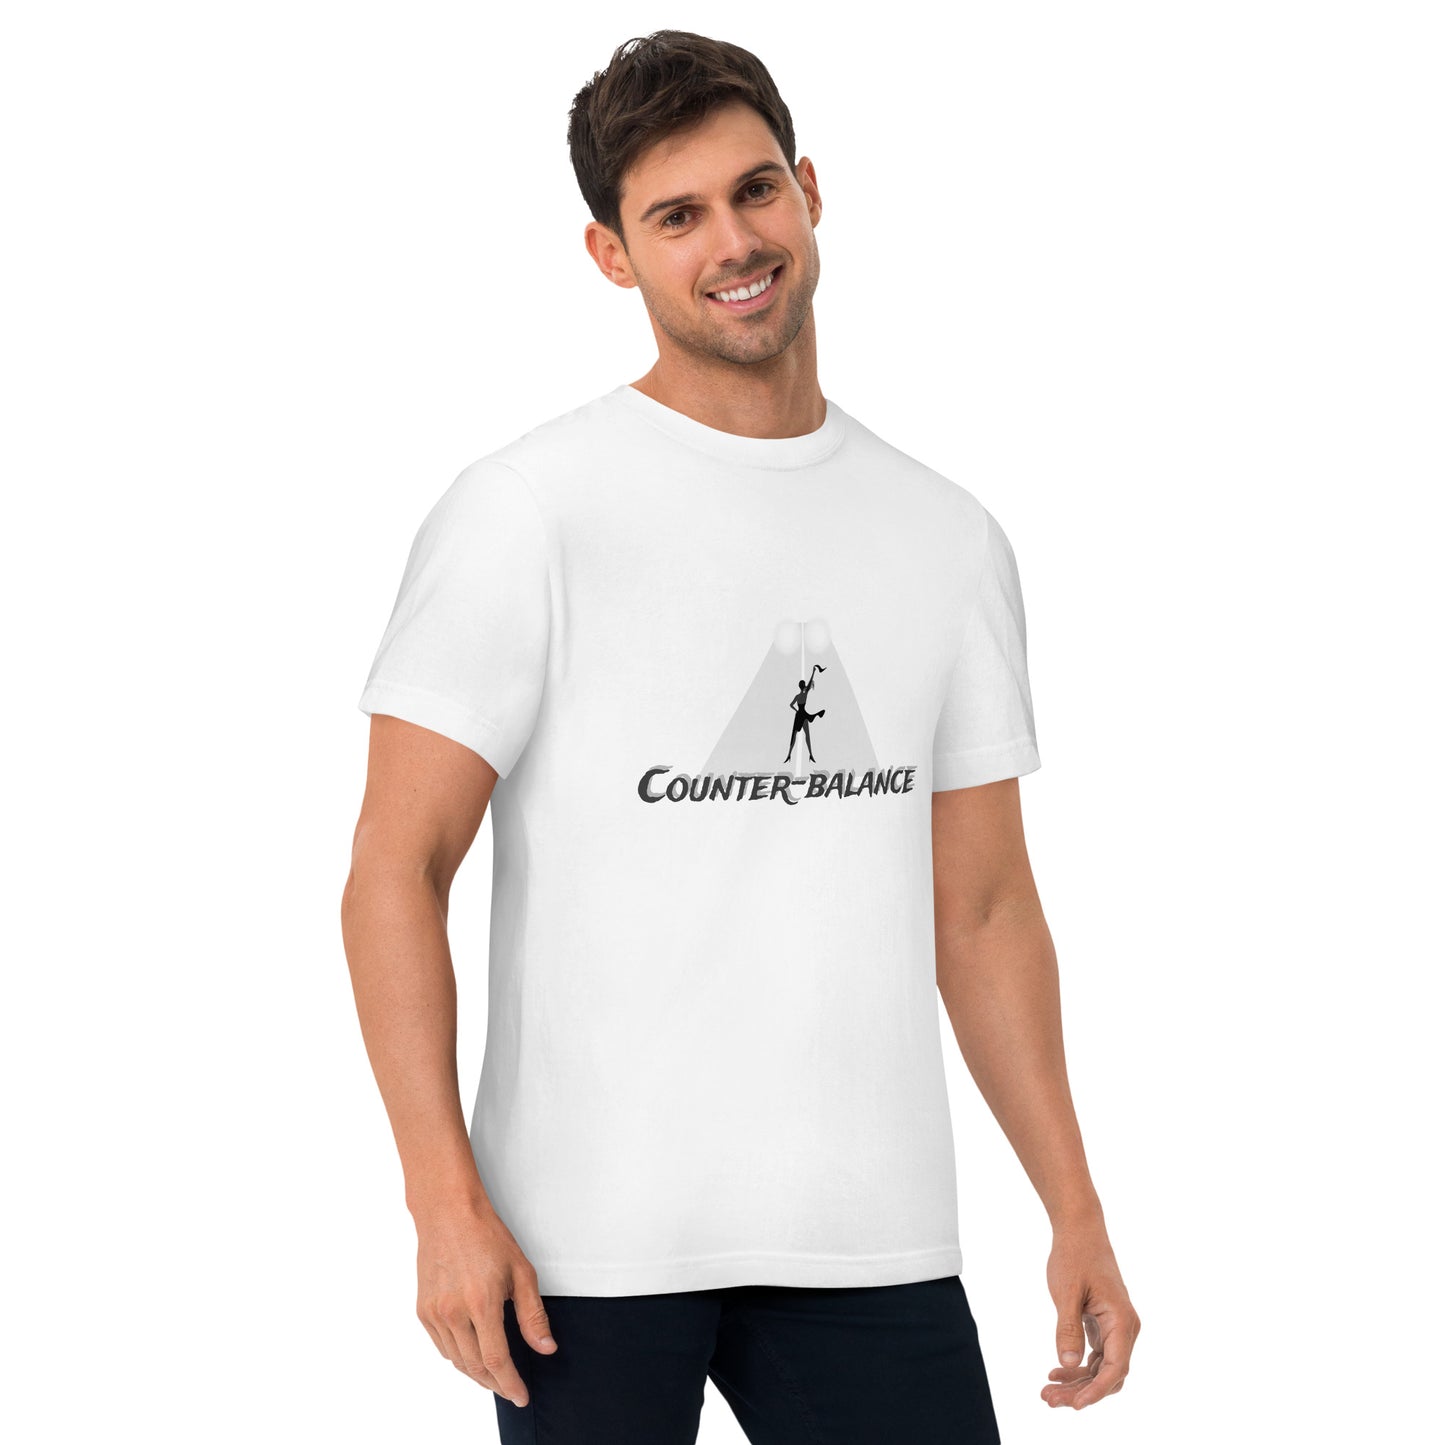 P010 - High Quality Cotton T-shirt (Get set! : White/Black)